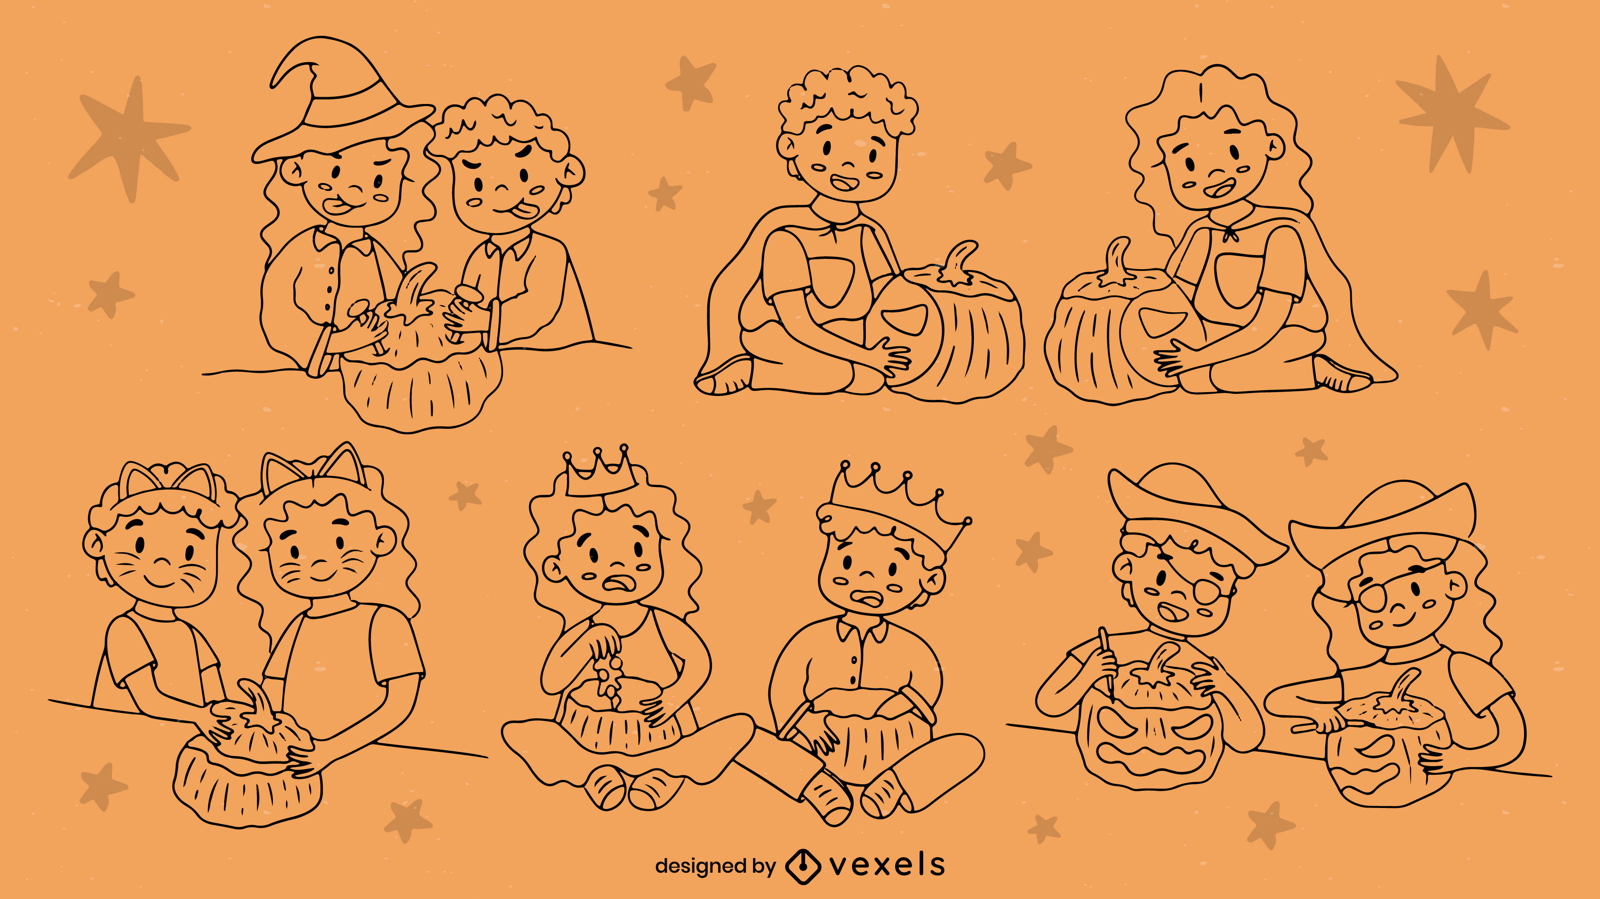 Pumpkin carving kids character set